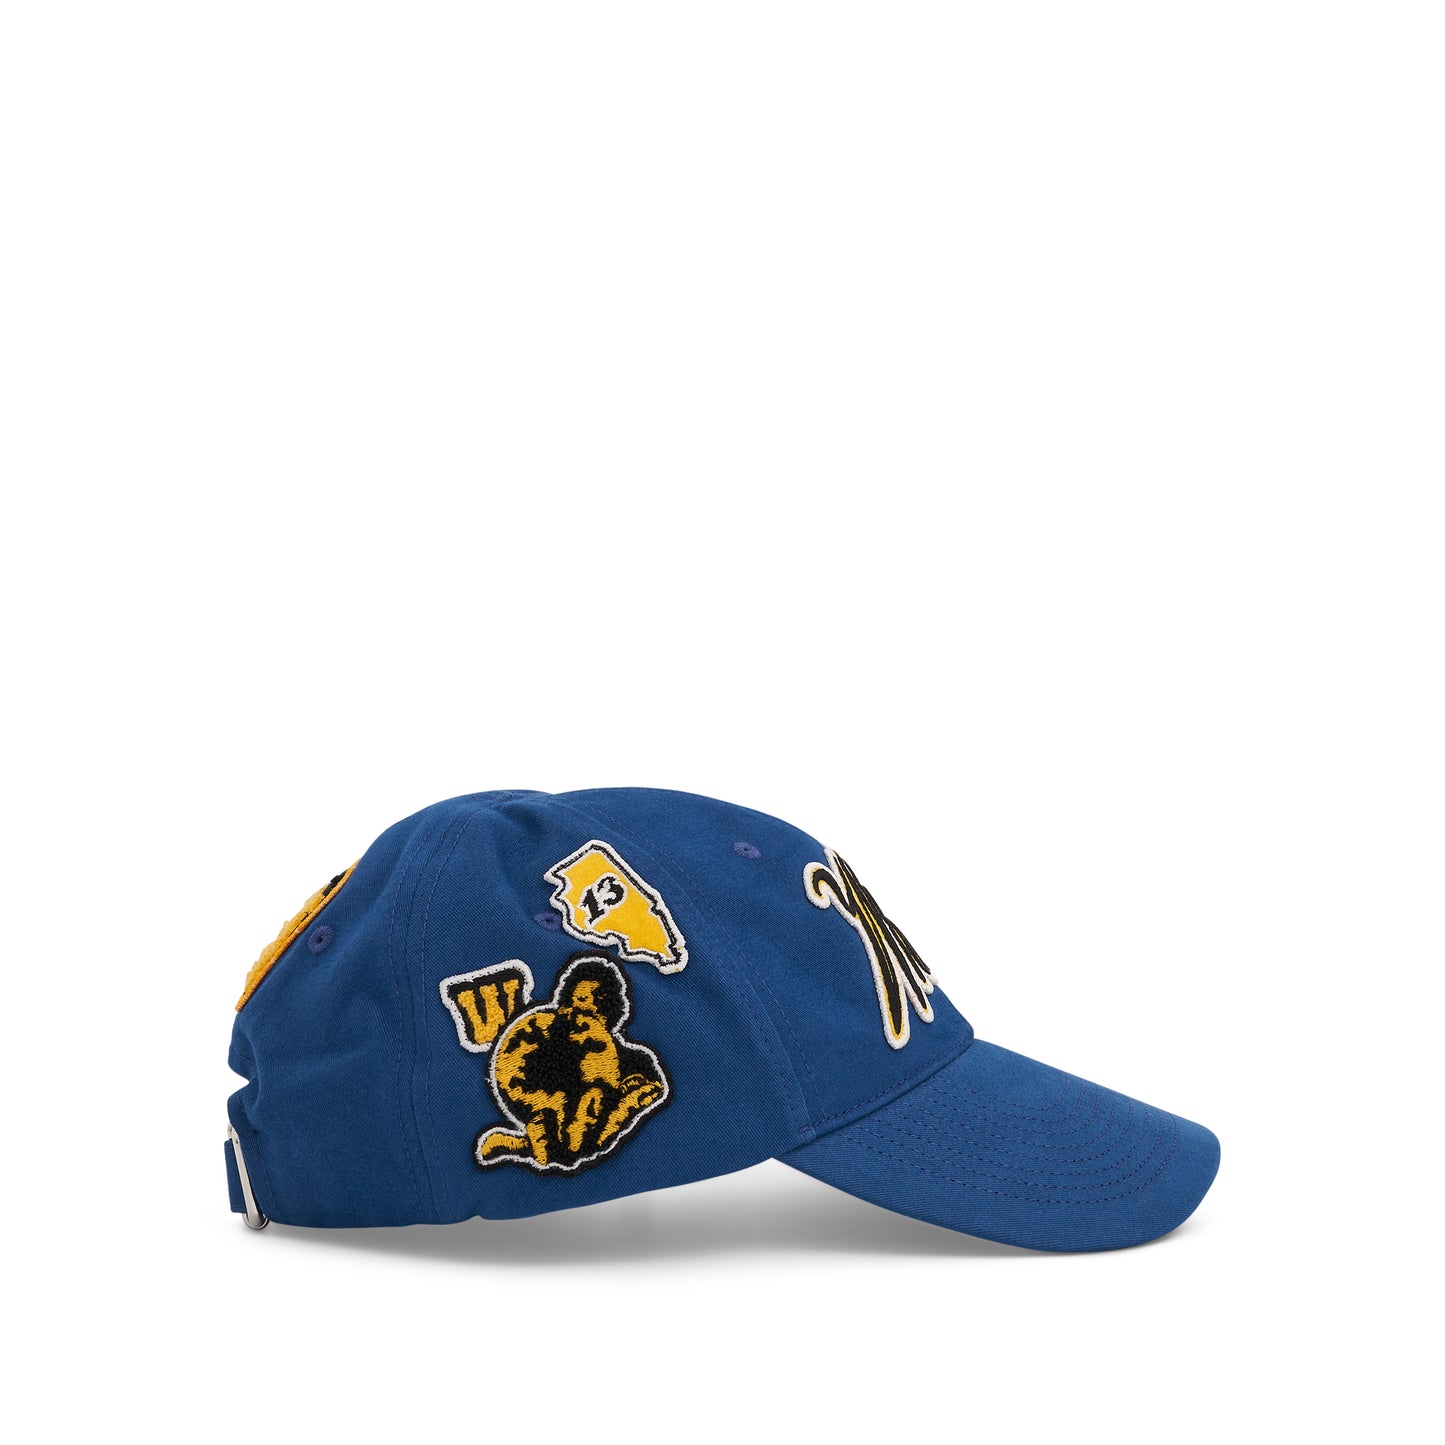 World Varsity Baseball Cap in Blue/Yellow